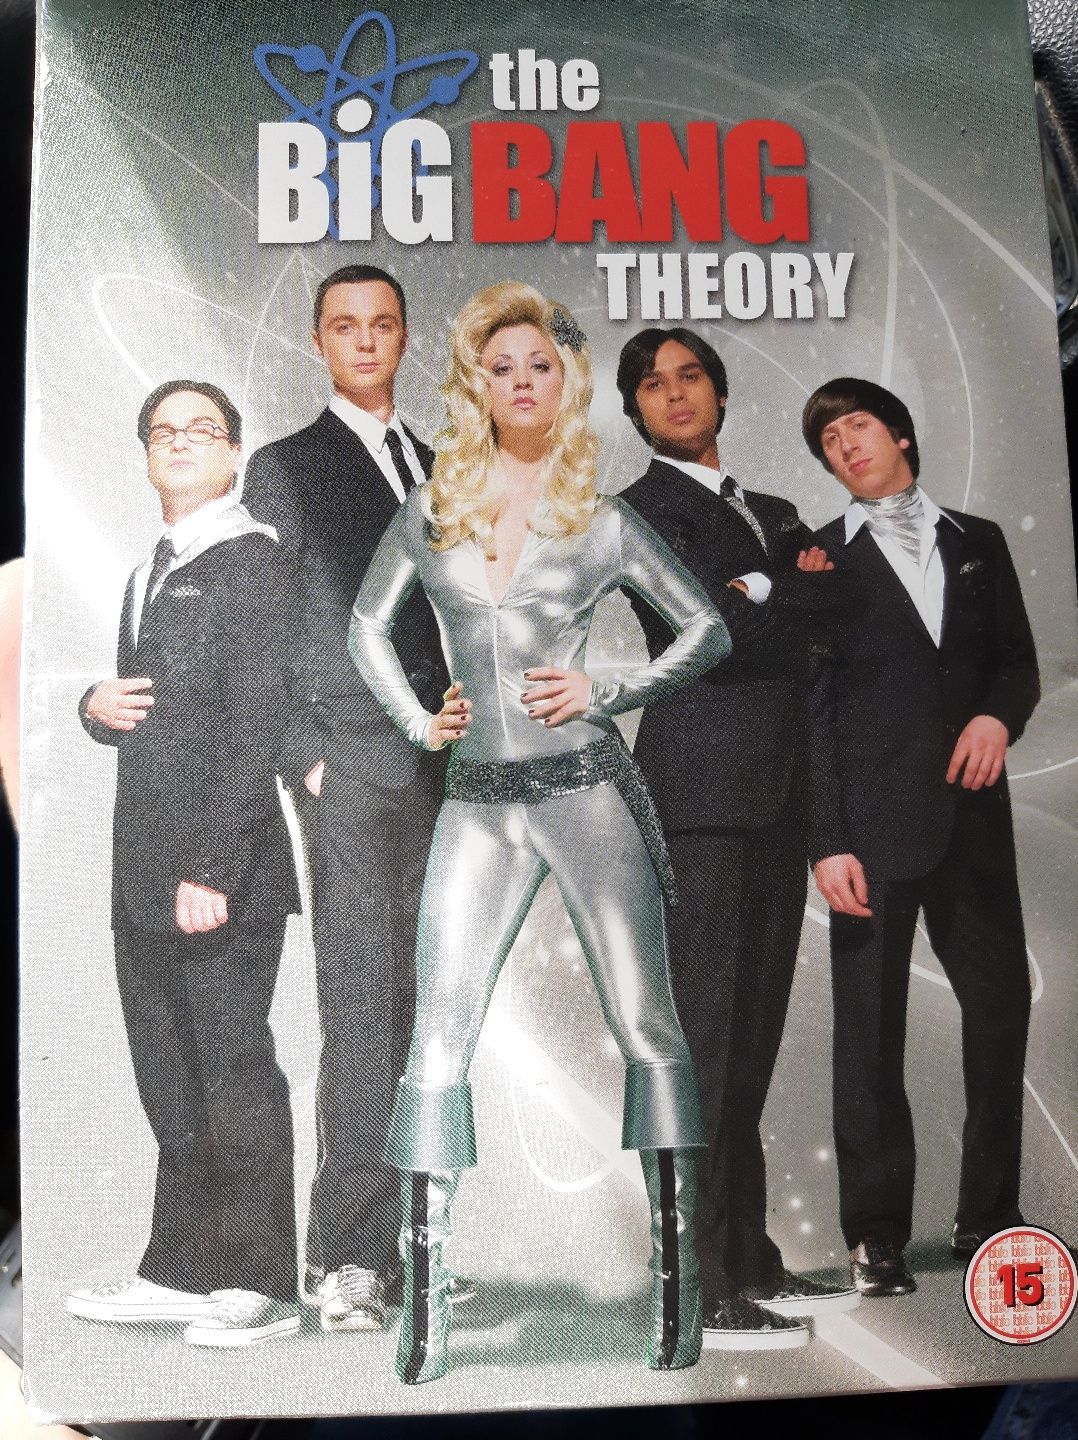 Big Bang theory sezoanele 1-4